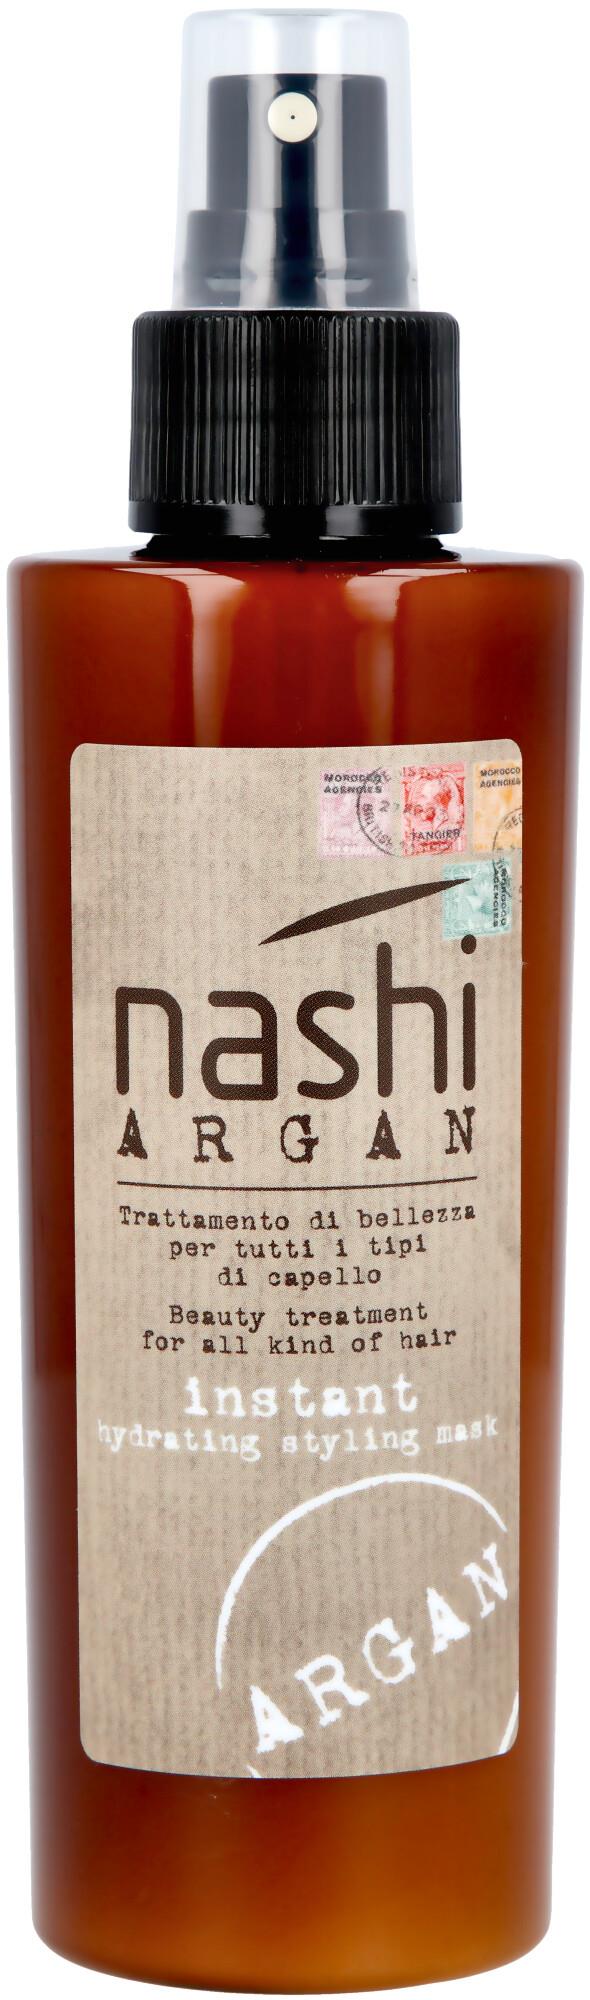 Nashi Argan Instant Hydrating Styling Mask 150 ml